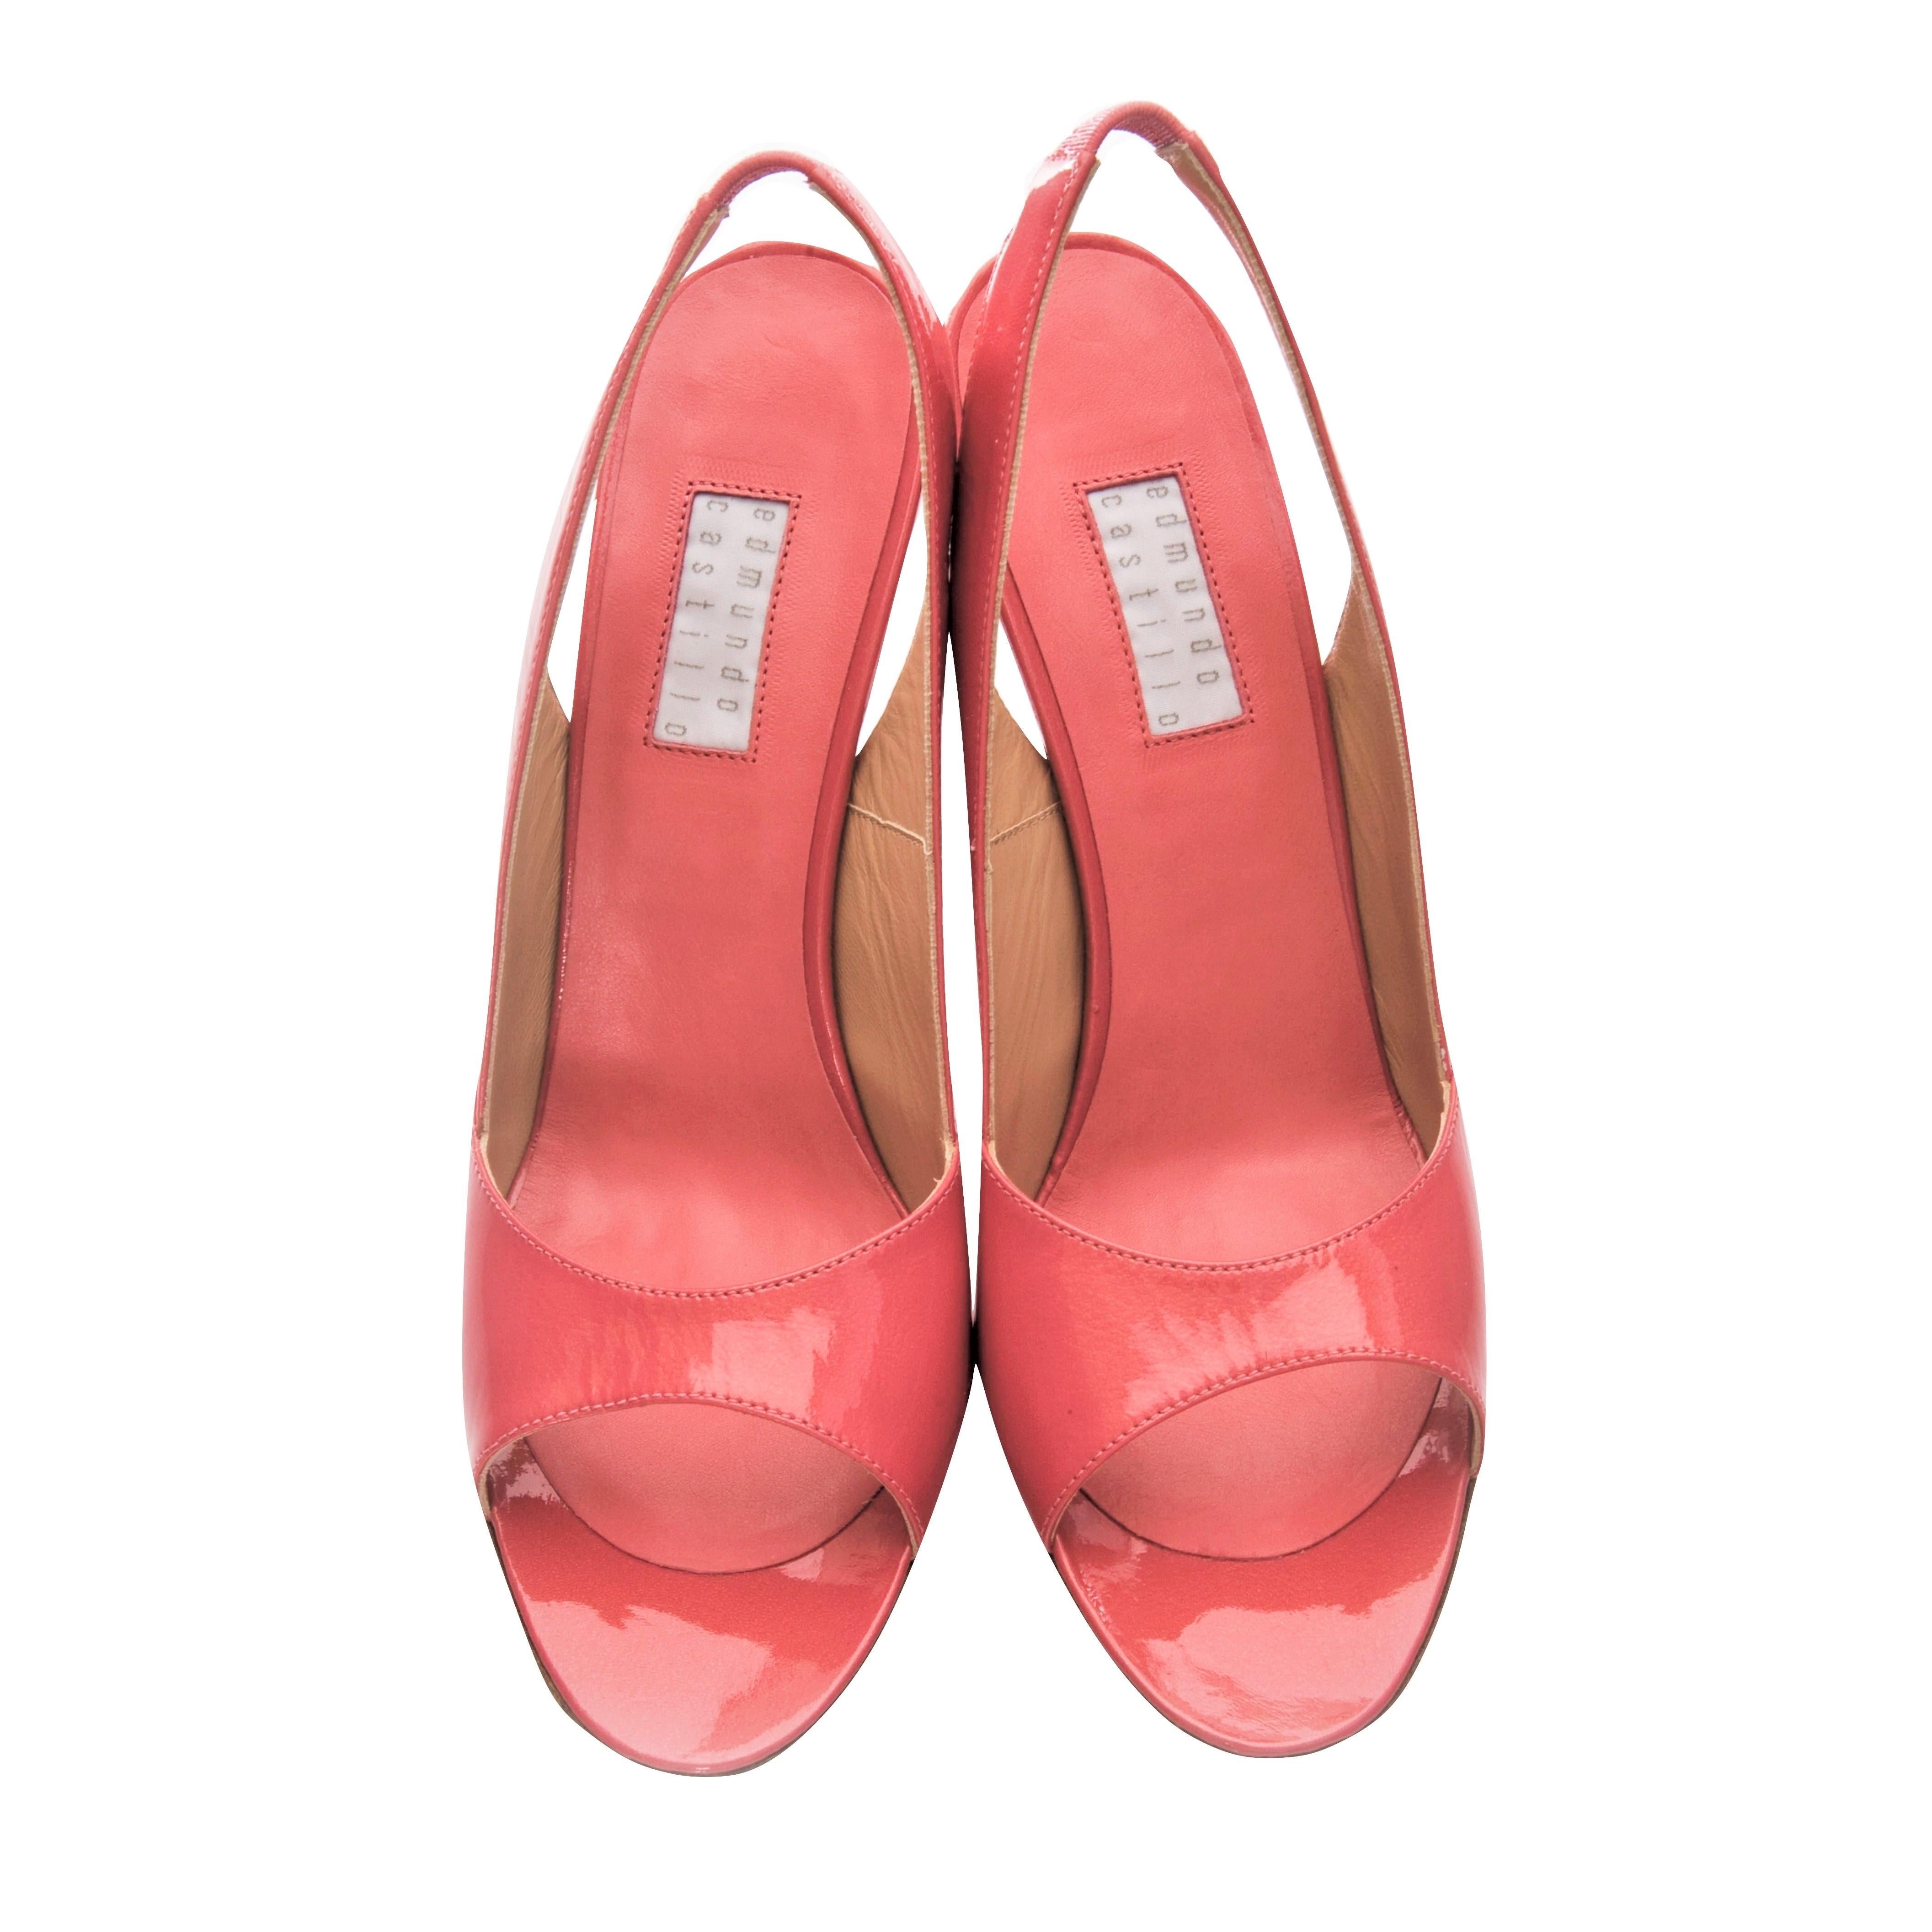 Women's New Edmundo Castillo Coral Patent Leather Sling Heels